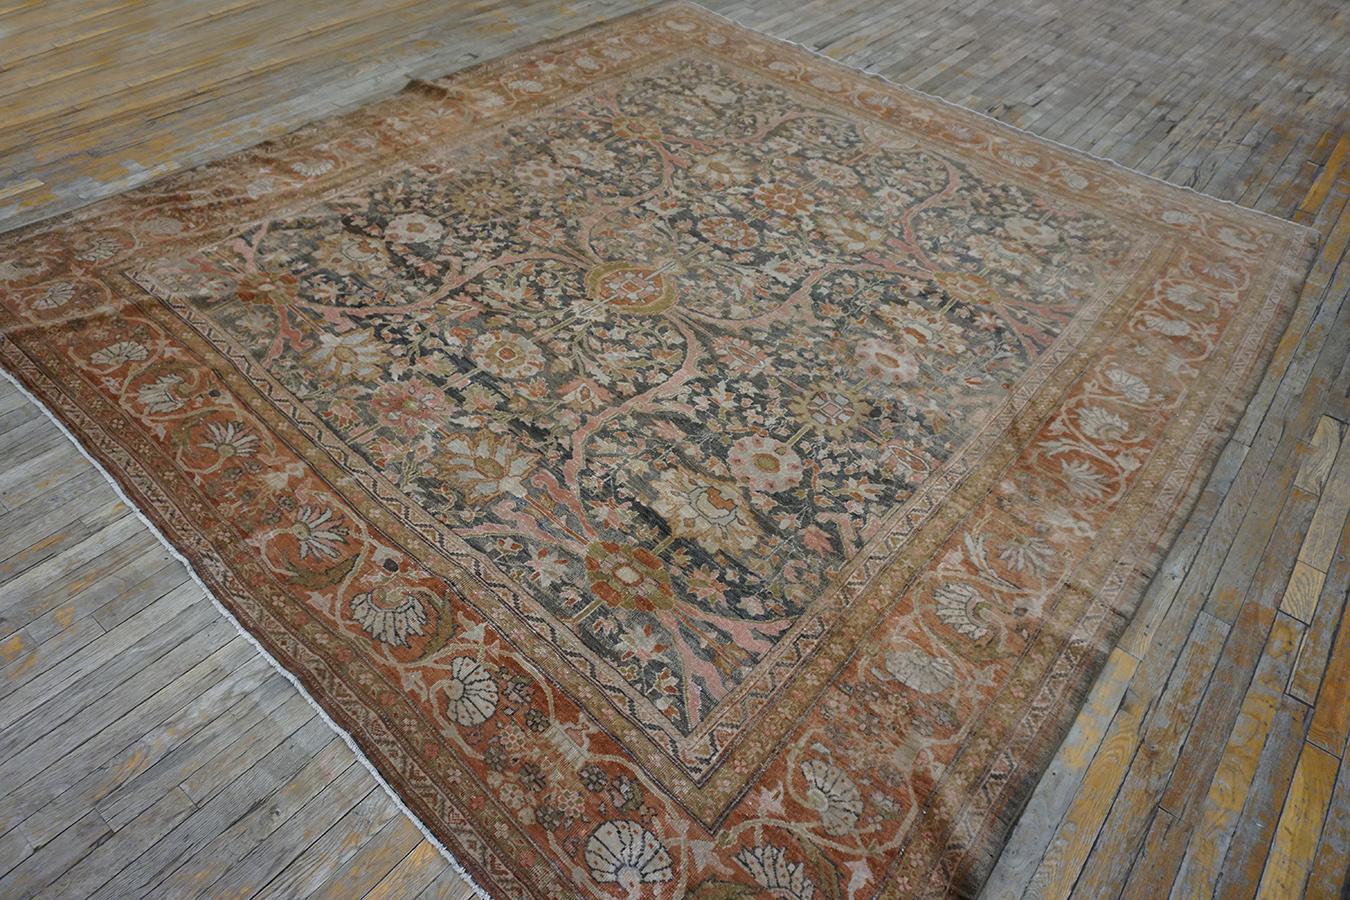 Antique Sultanabad rug, measures: 9'6